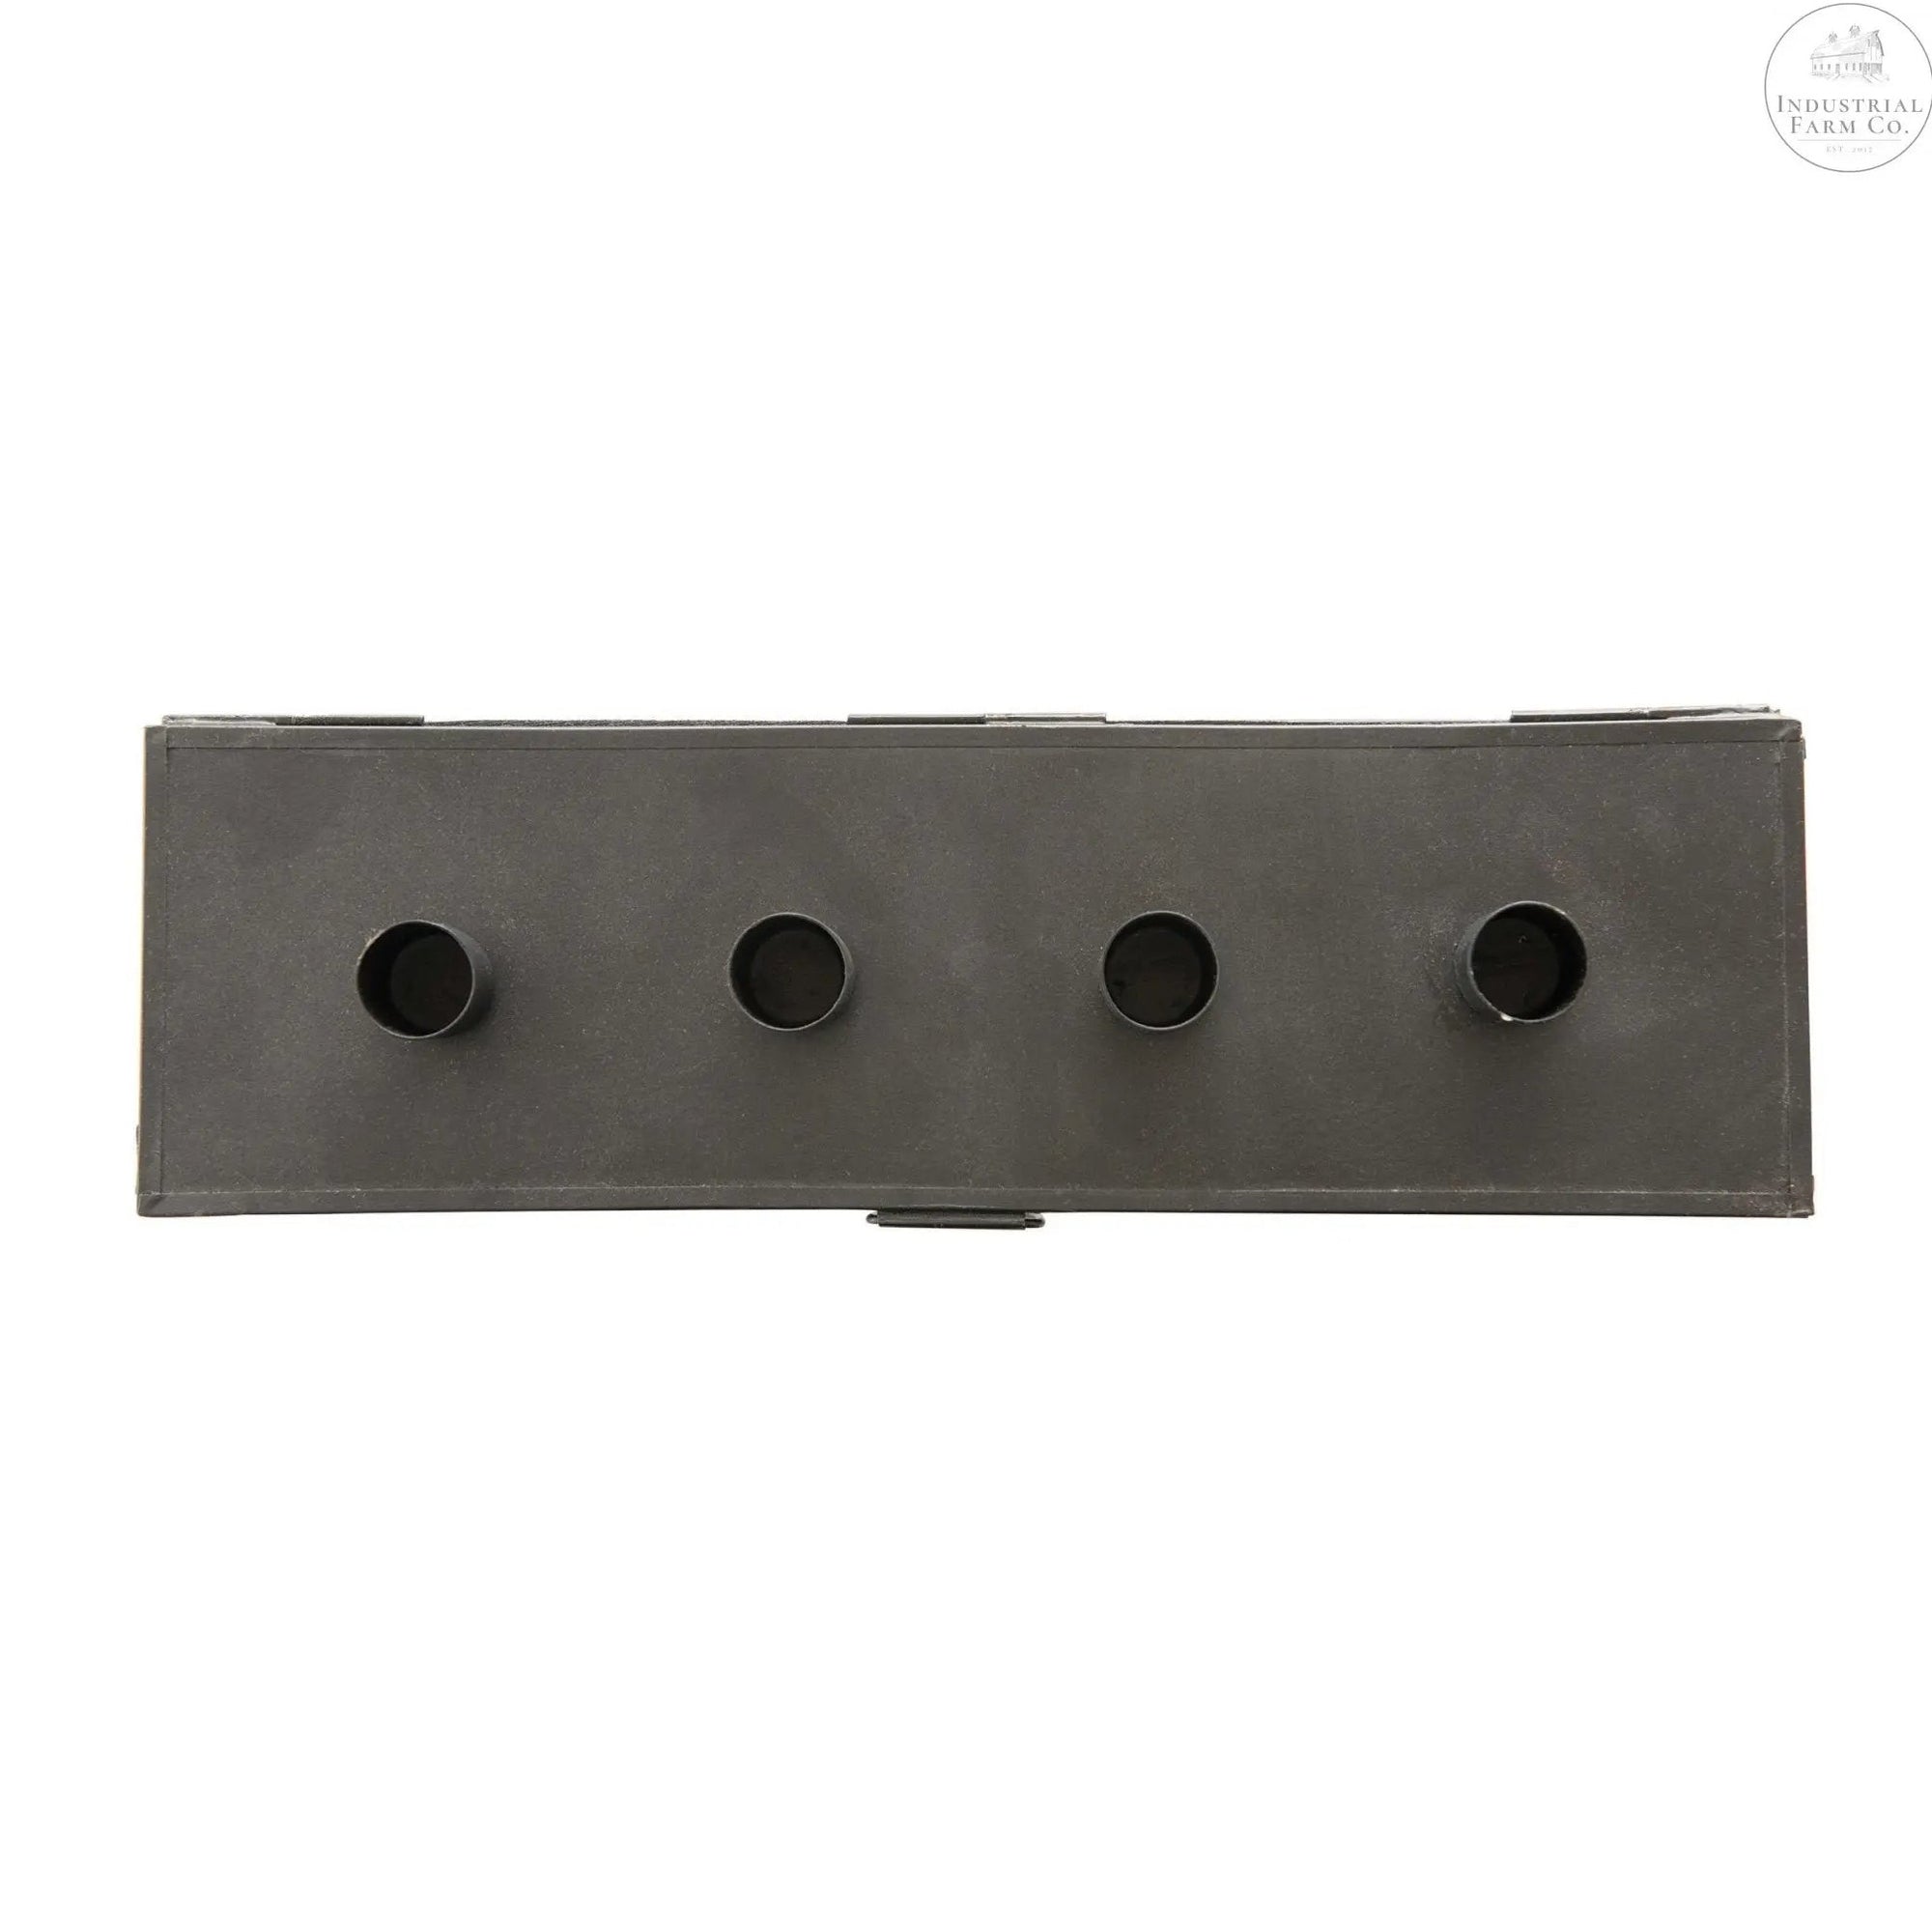 Metal Taper Holder Display Case     | Industrial Farm Co